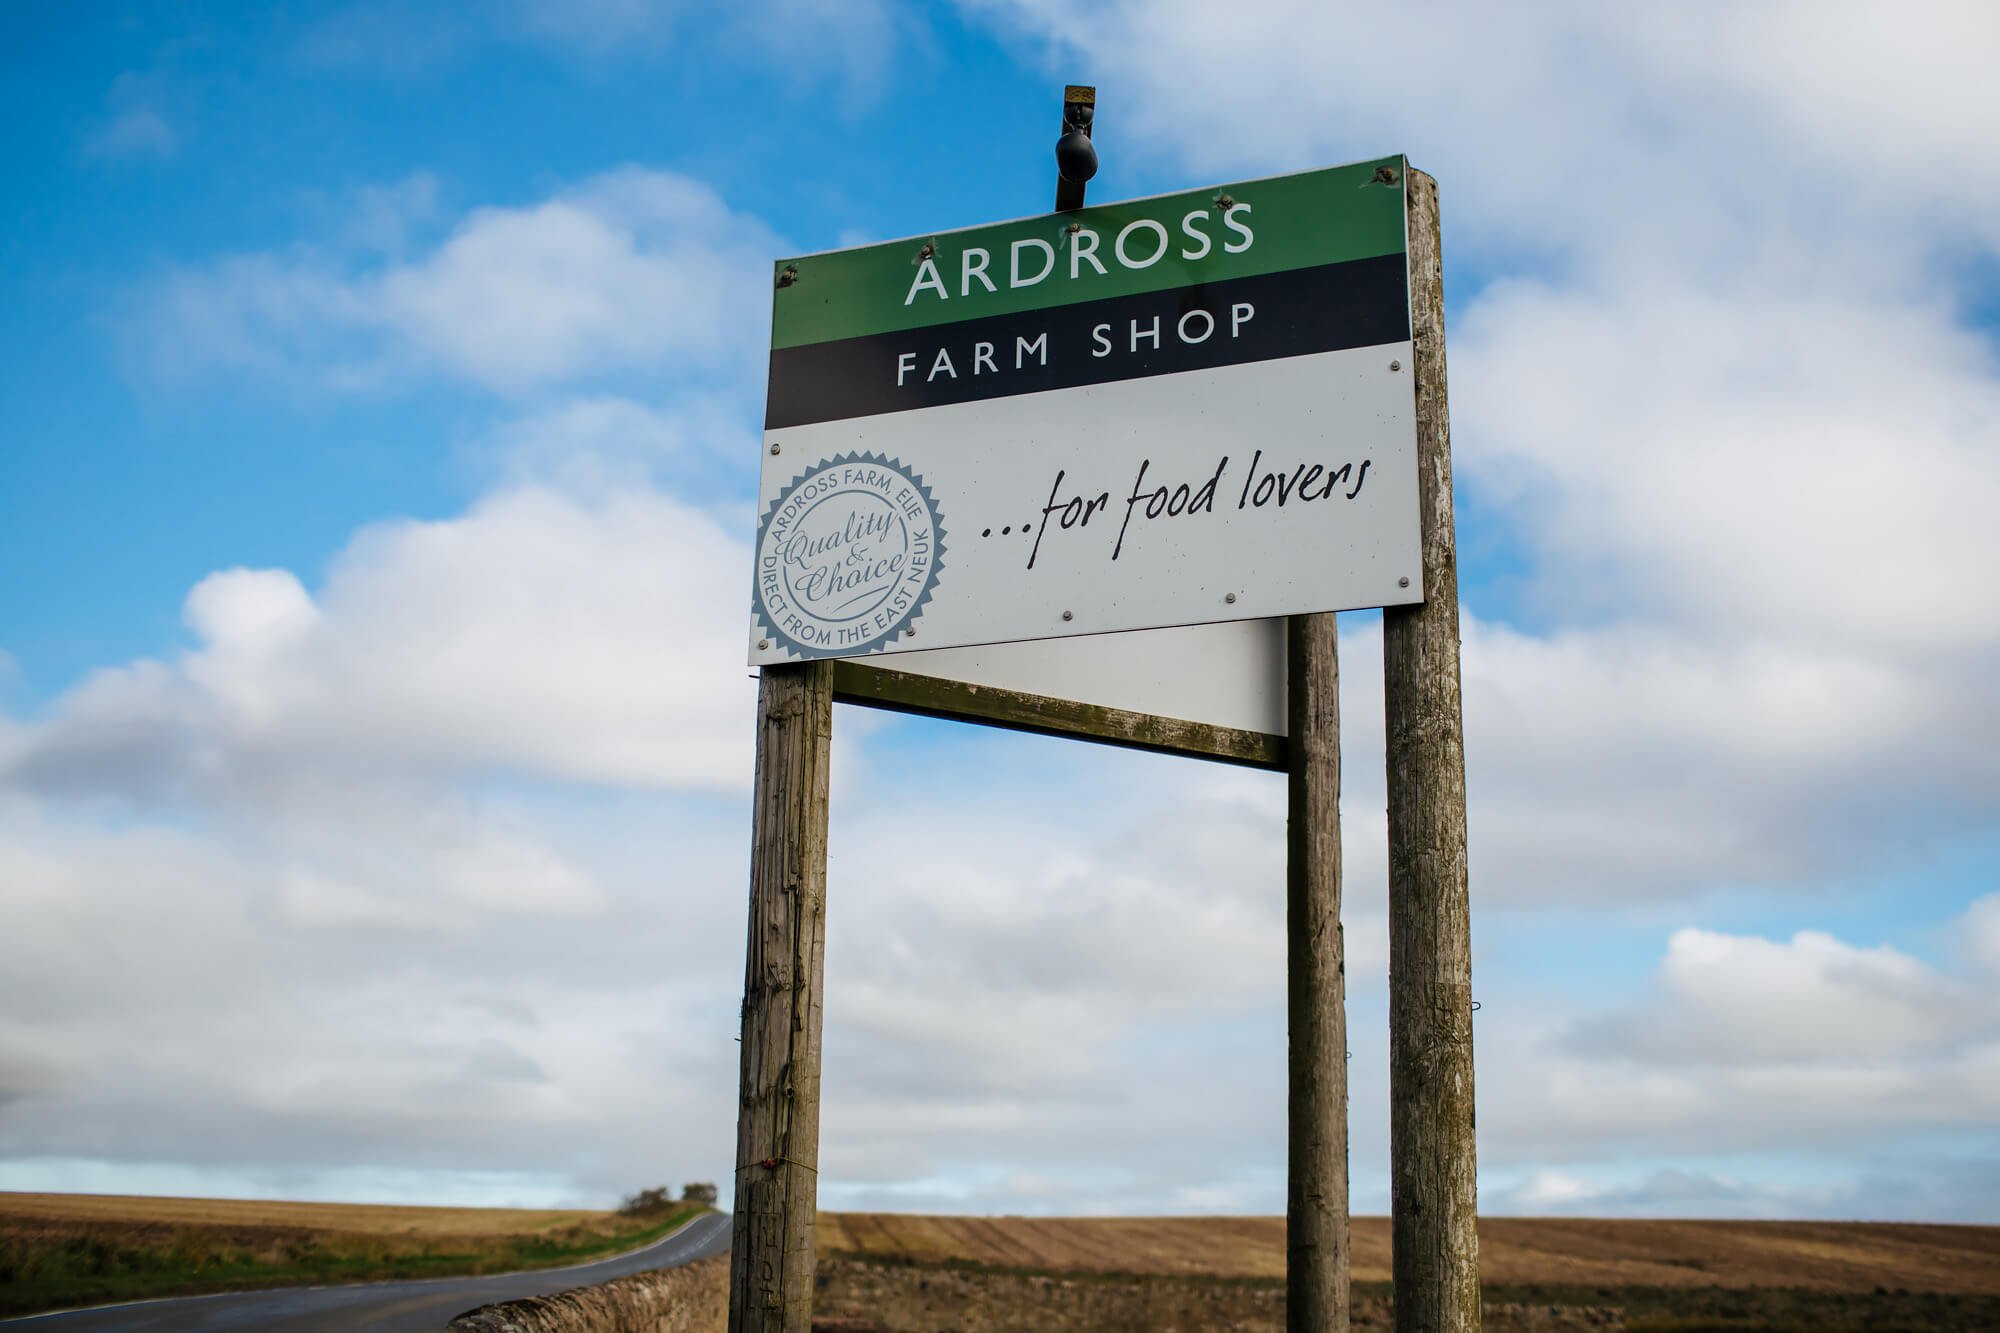 Ardross Farm Shop sign in Scotland